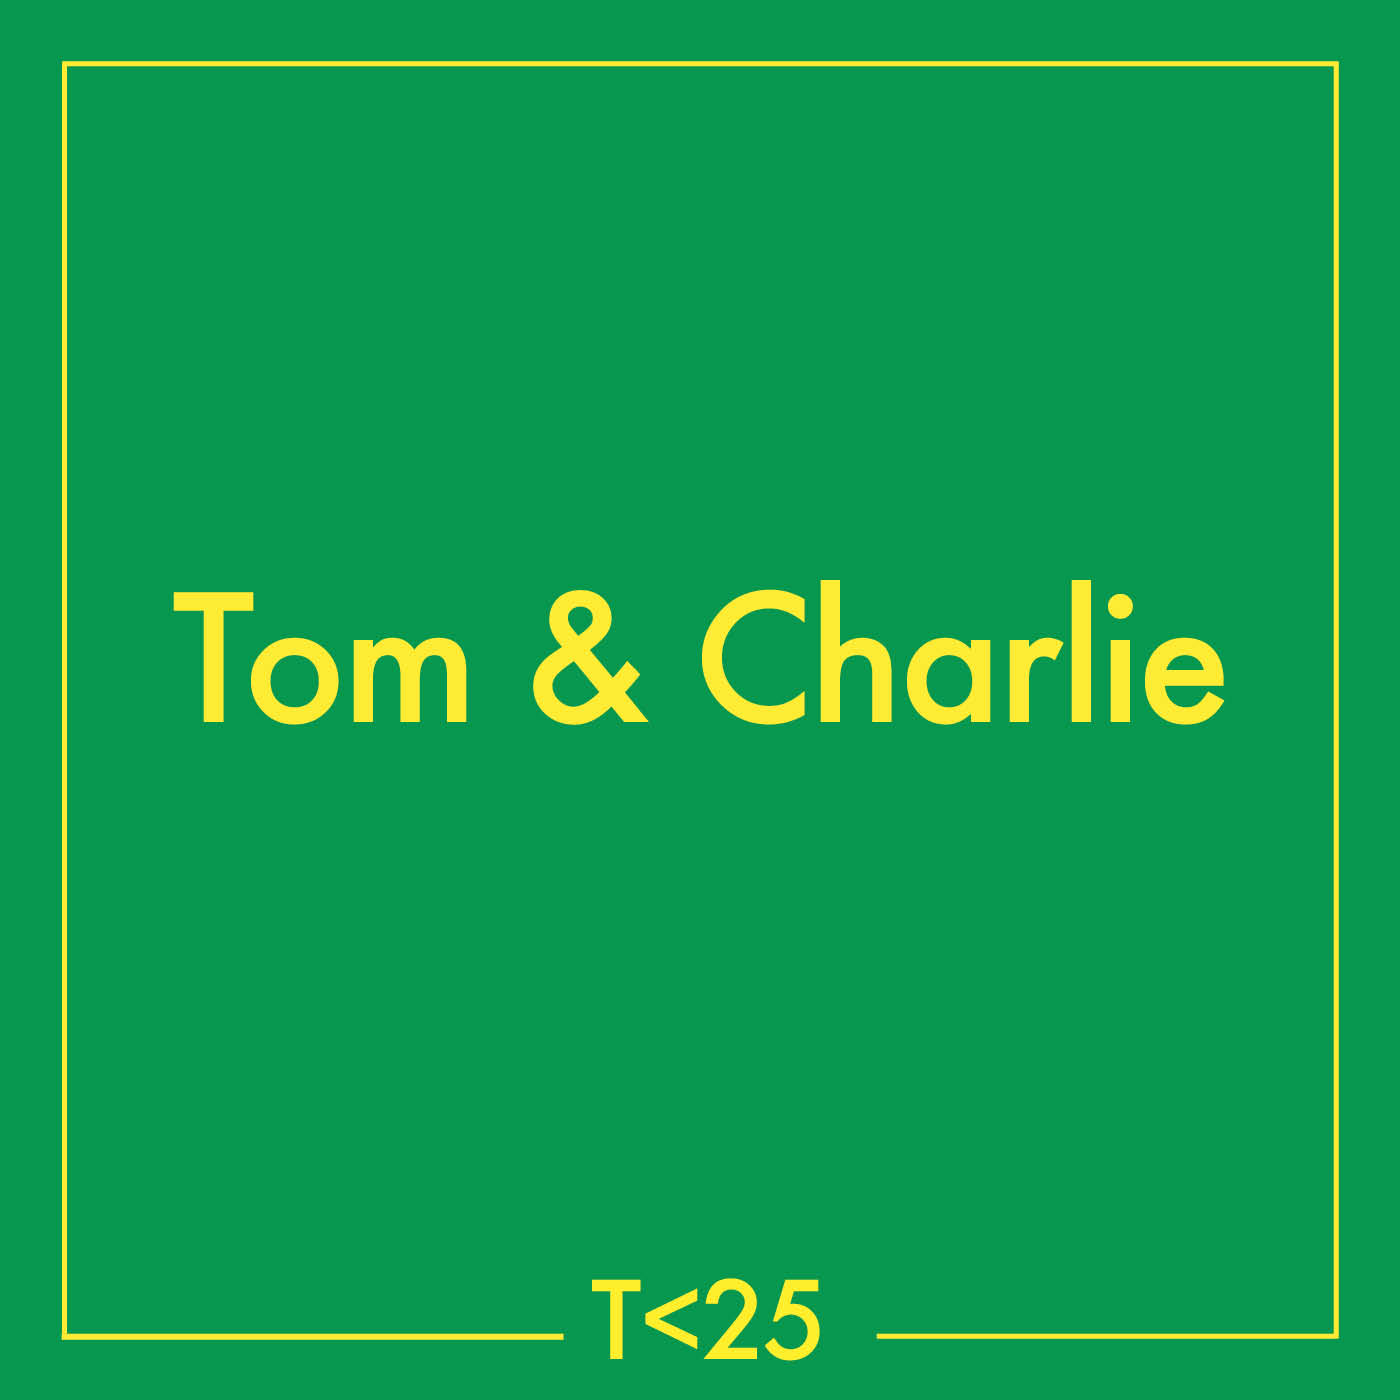 Tom and Charlie